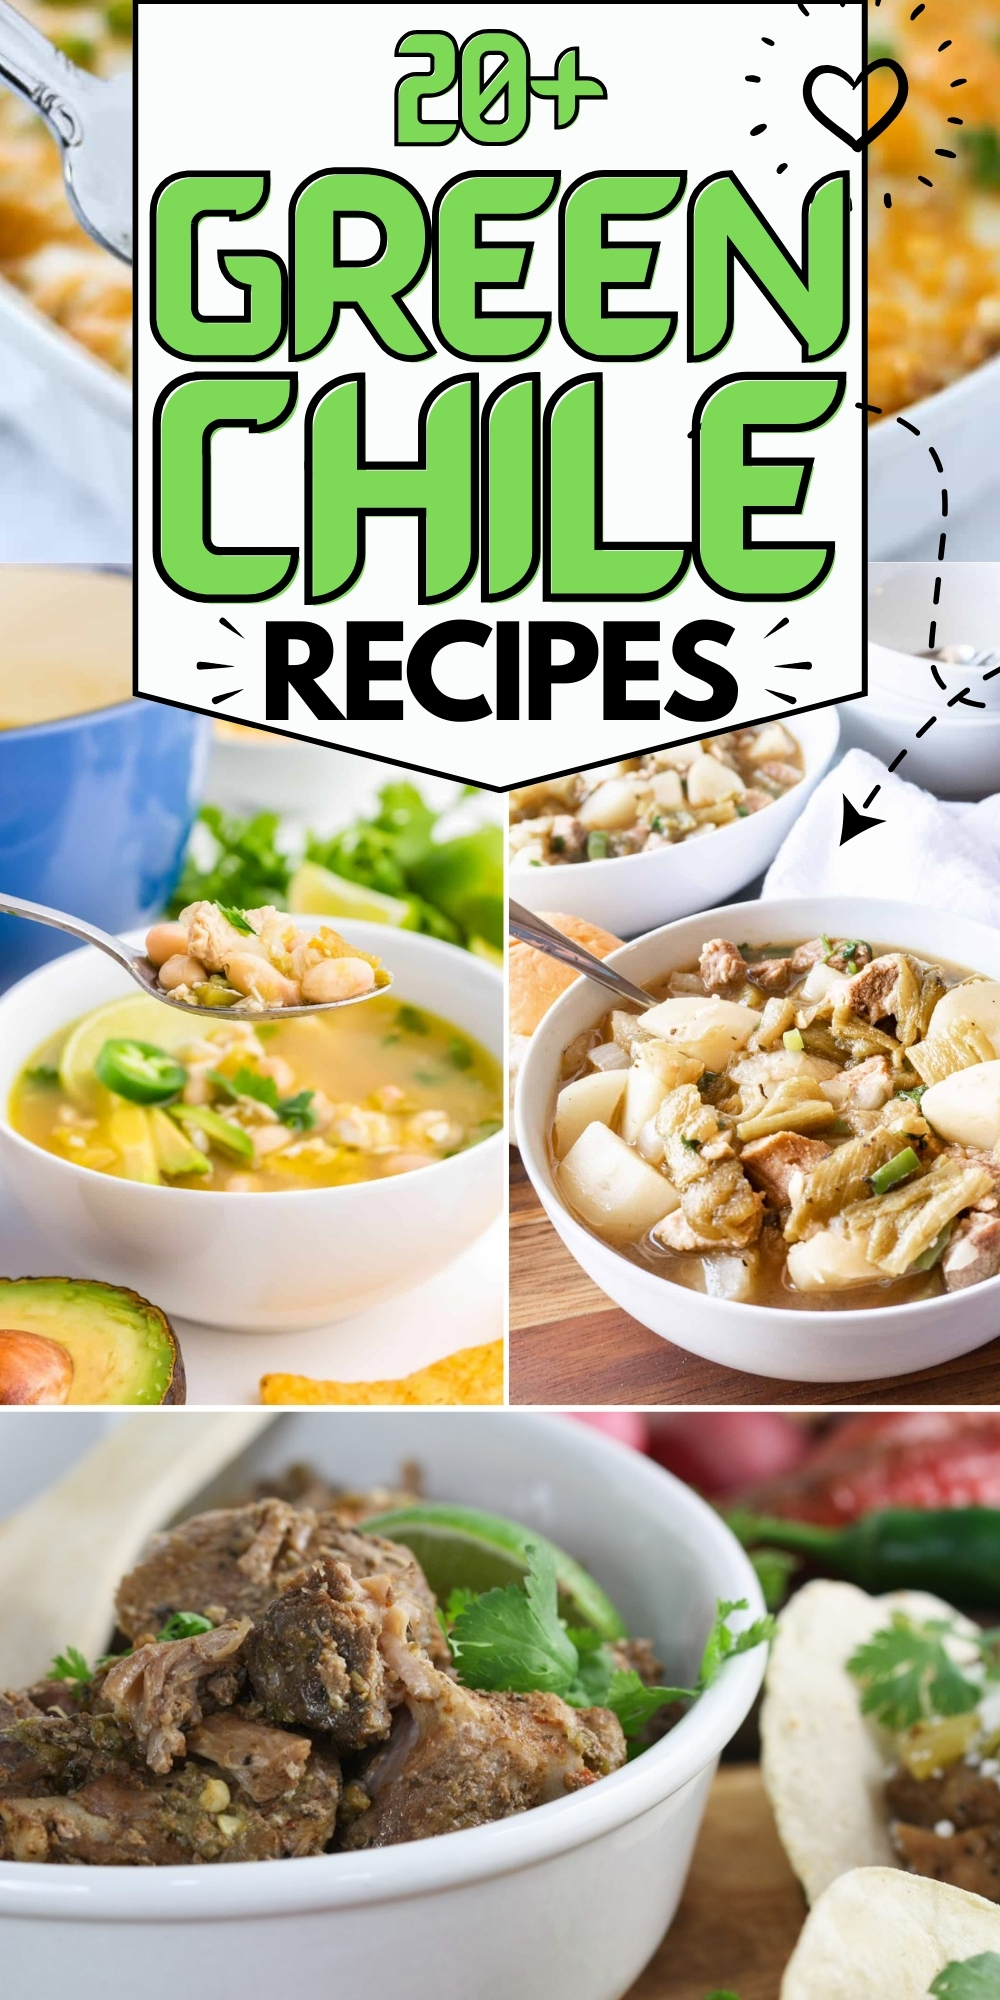 20+ Green Chile Pepper Recipes